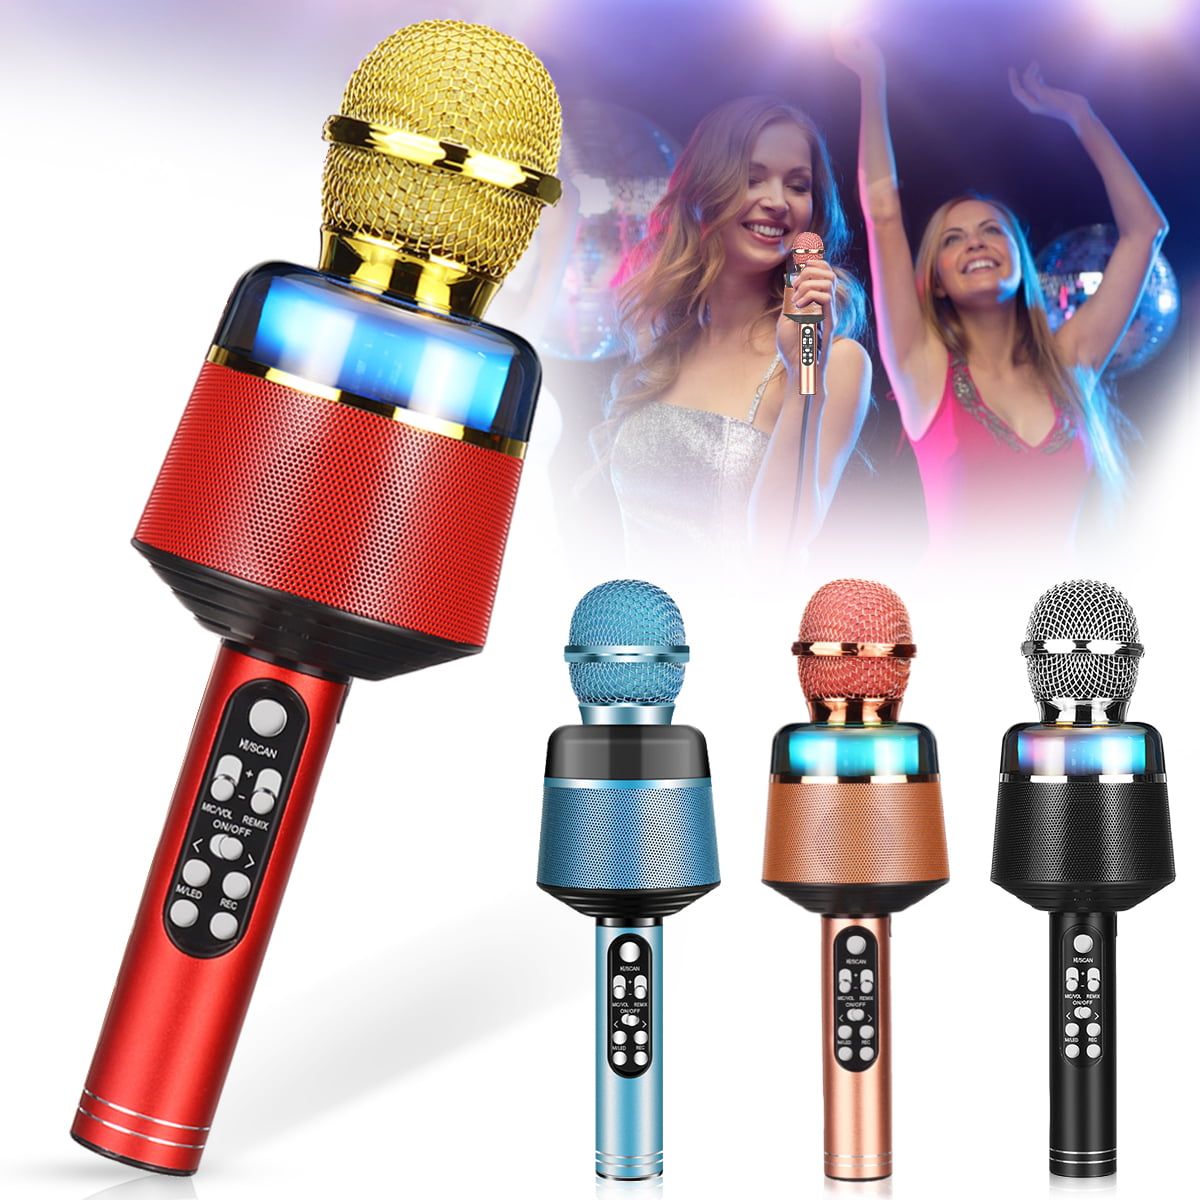 Twinkstar Heart Shape Bluetooth Karaoke Wireless Microphone，4 in 1 Portable Handheld Karaoke Microphone with LED Lights for Kids Adults Birthday Party Home KTV 